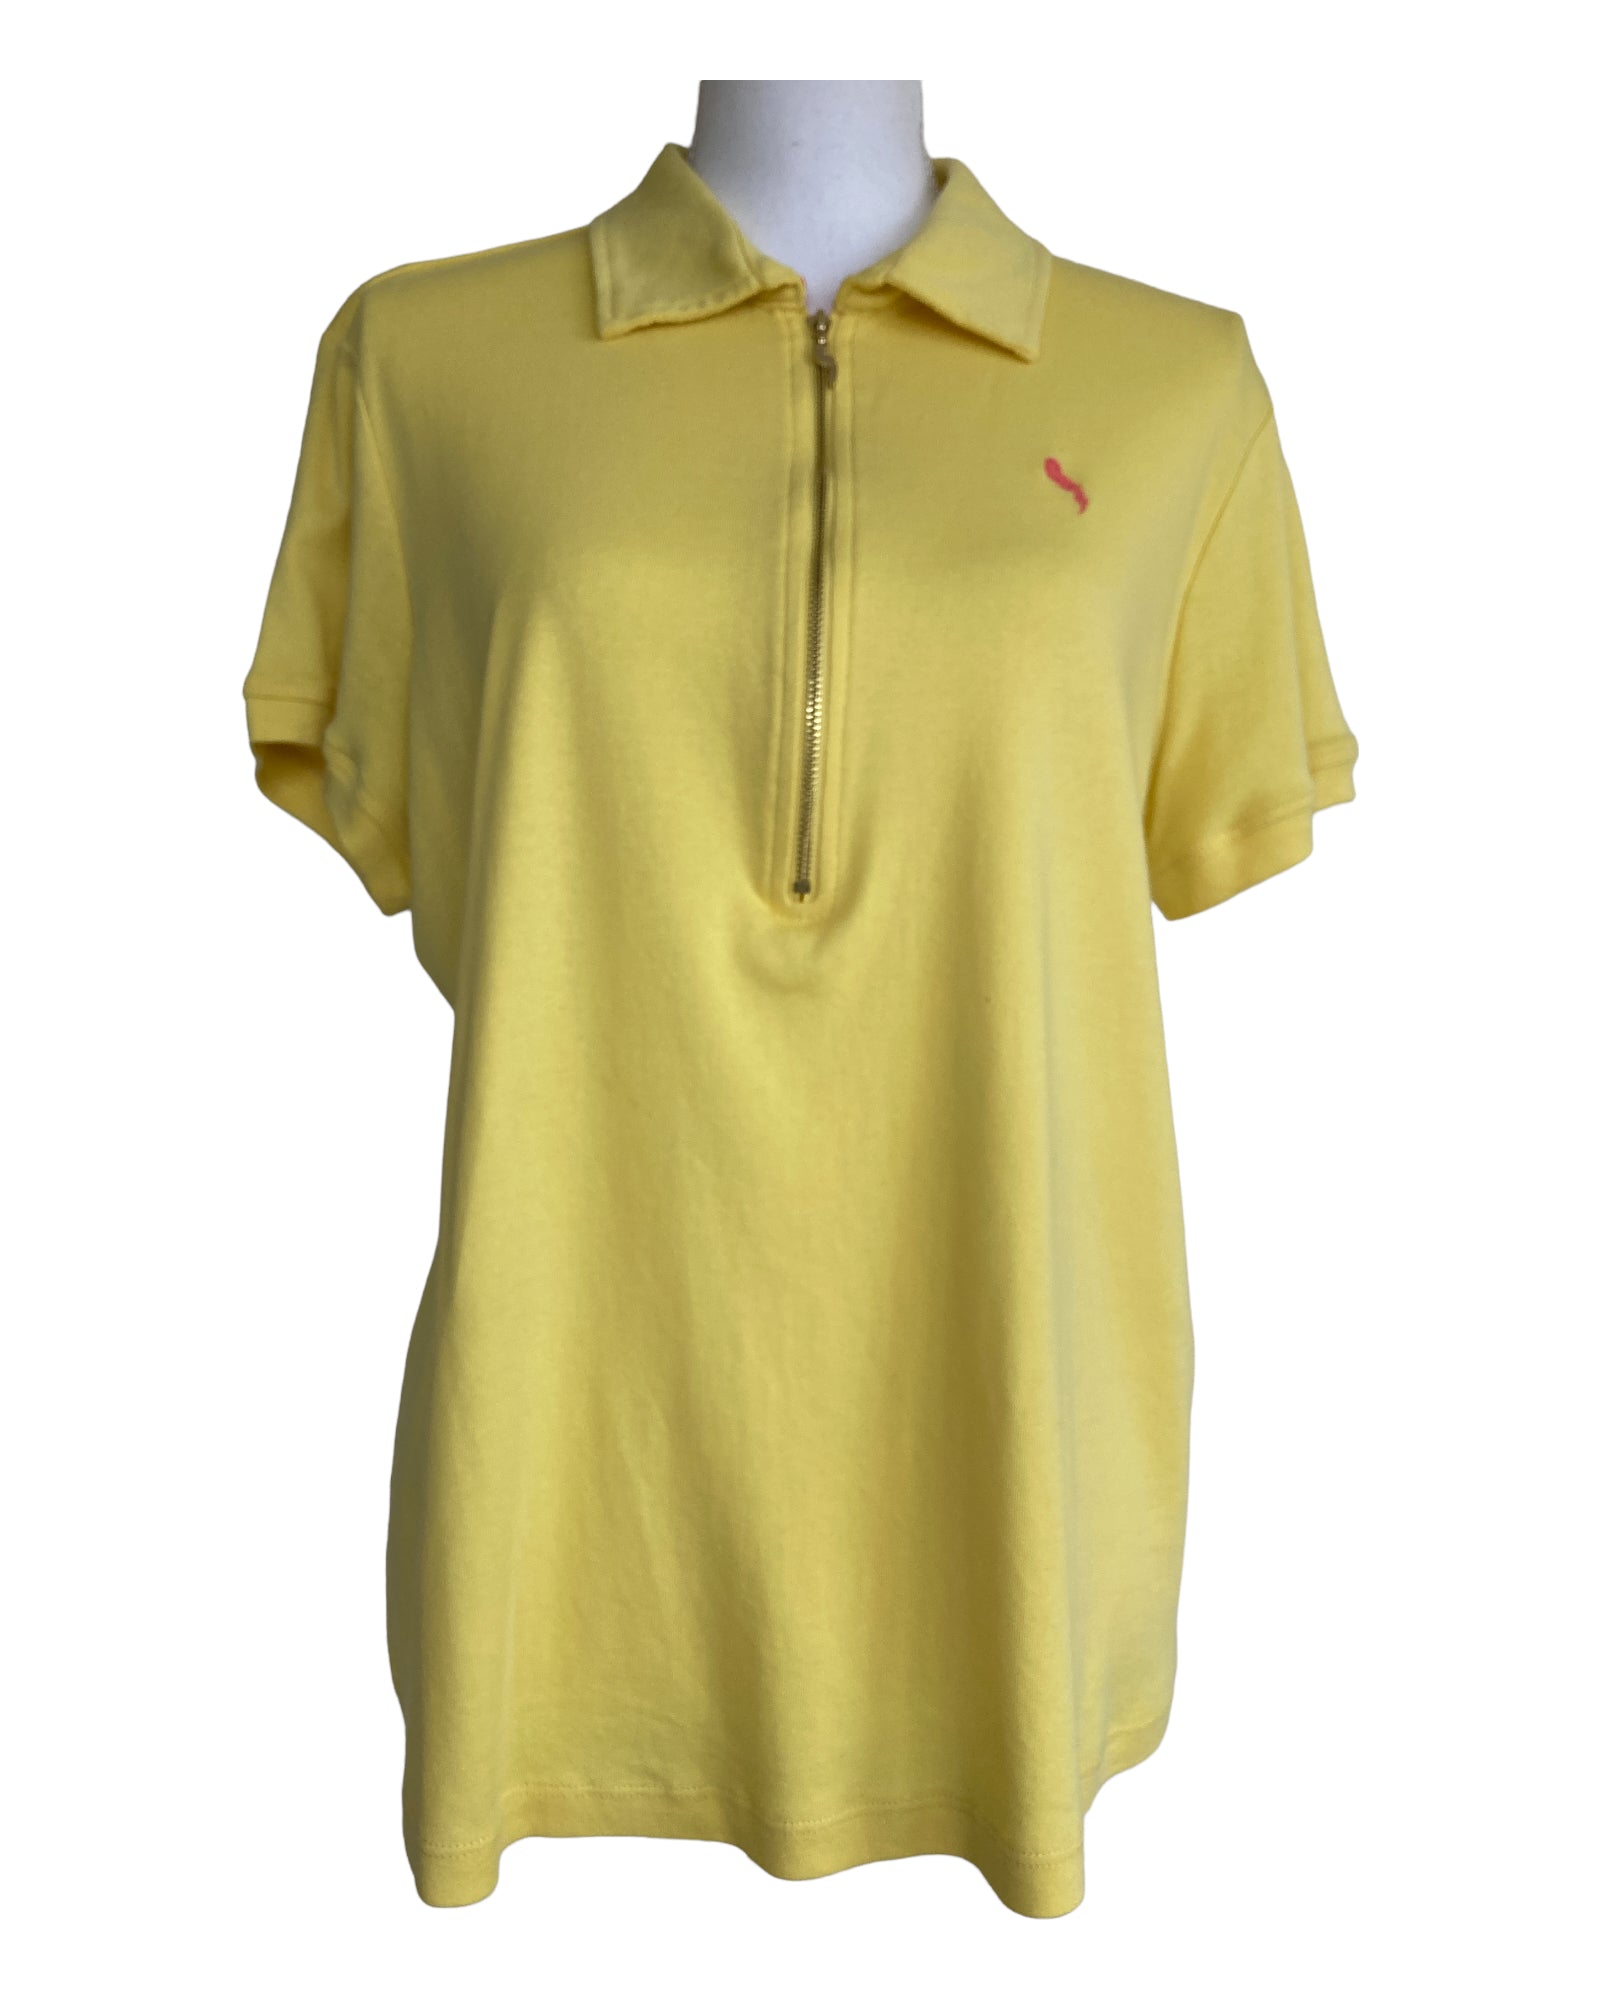 Pappagallo Yellow Polo, XL